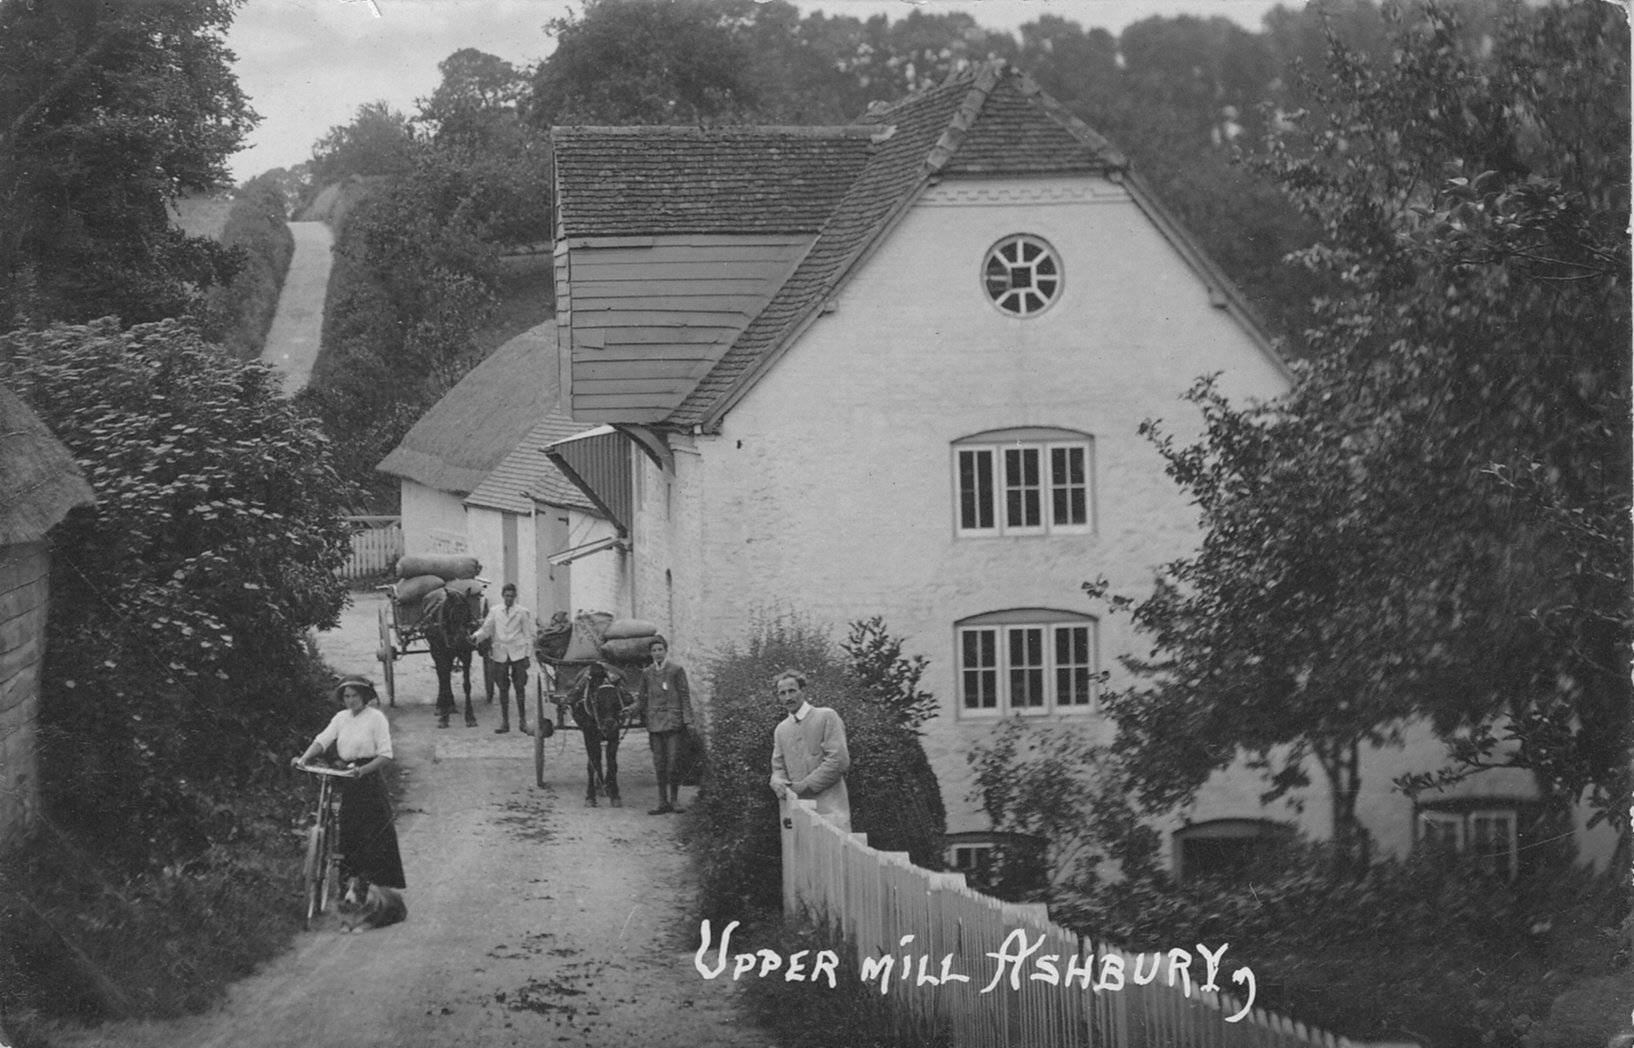 Upper Mill Kingston Winslow - Ashbury circa 1920. Photo courtesy of Paul Williams